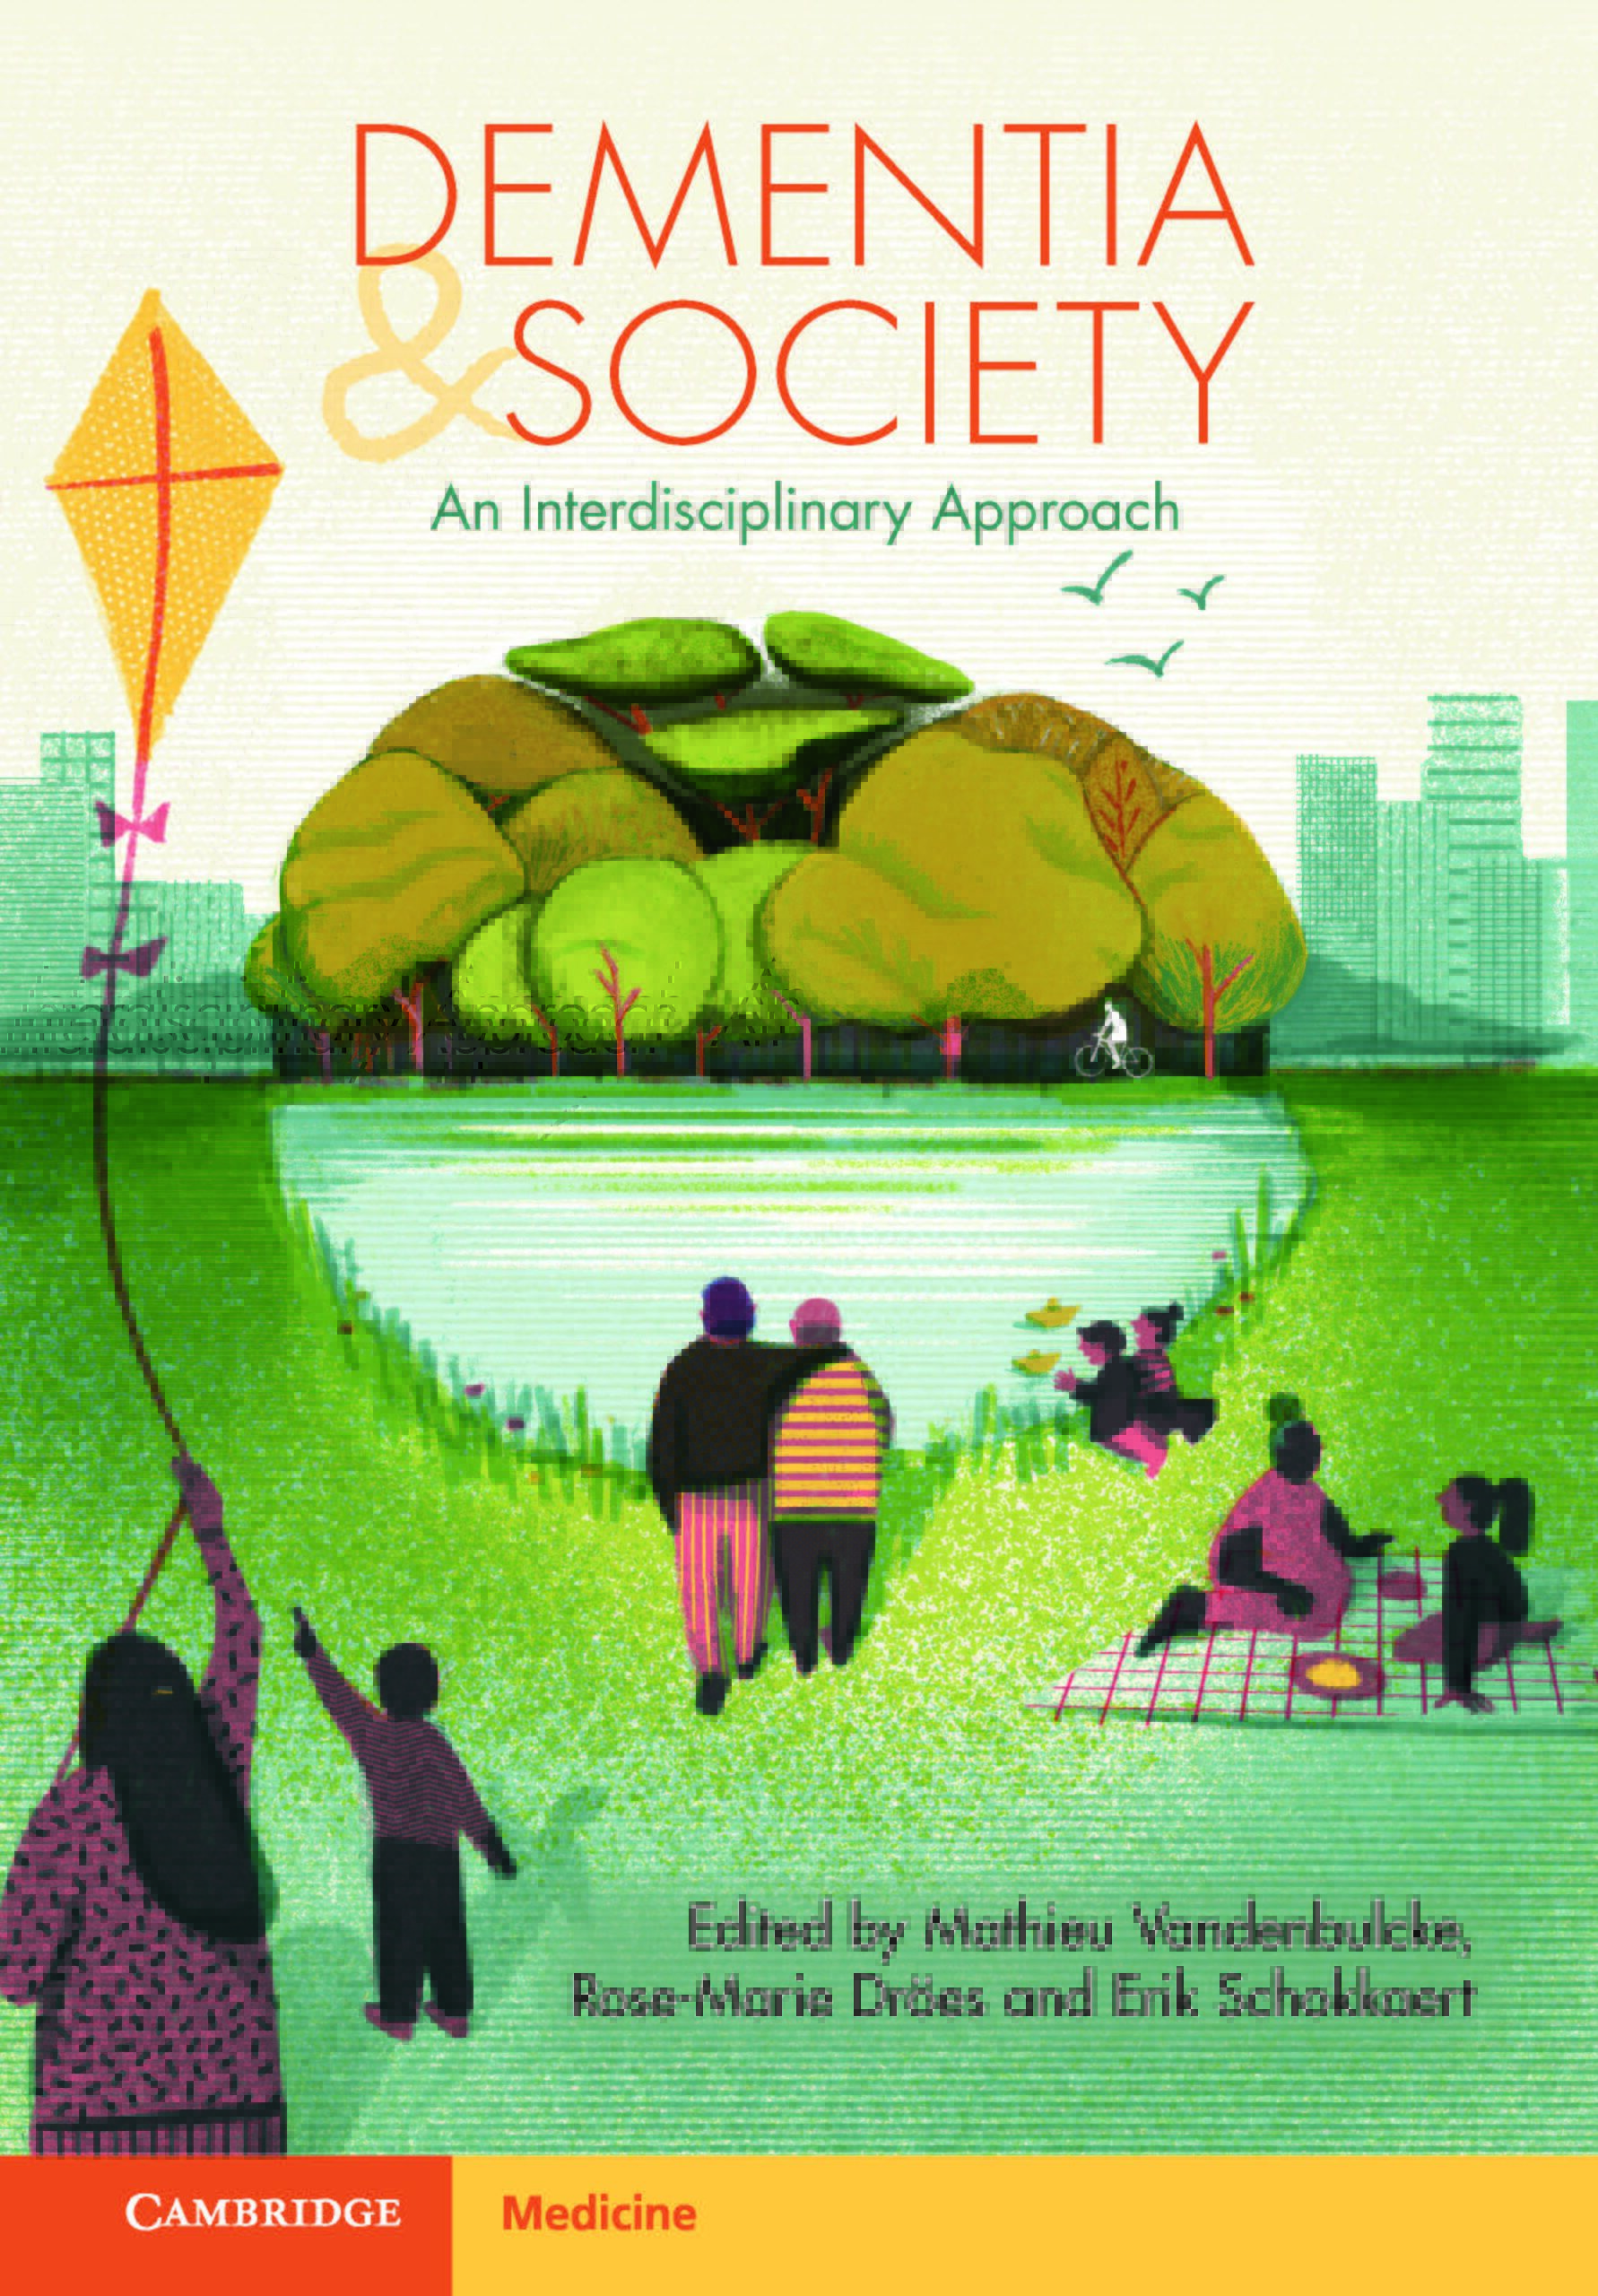 Book launch: Dementia & Society